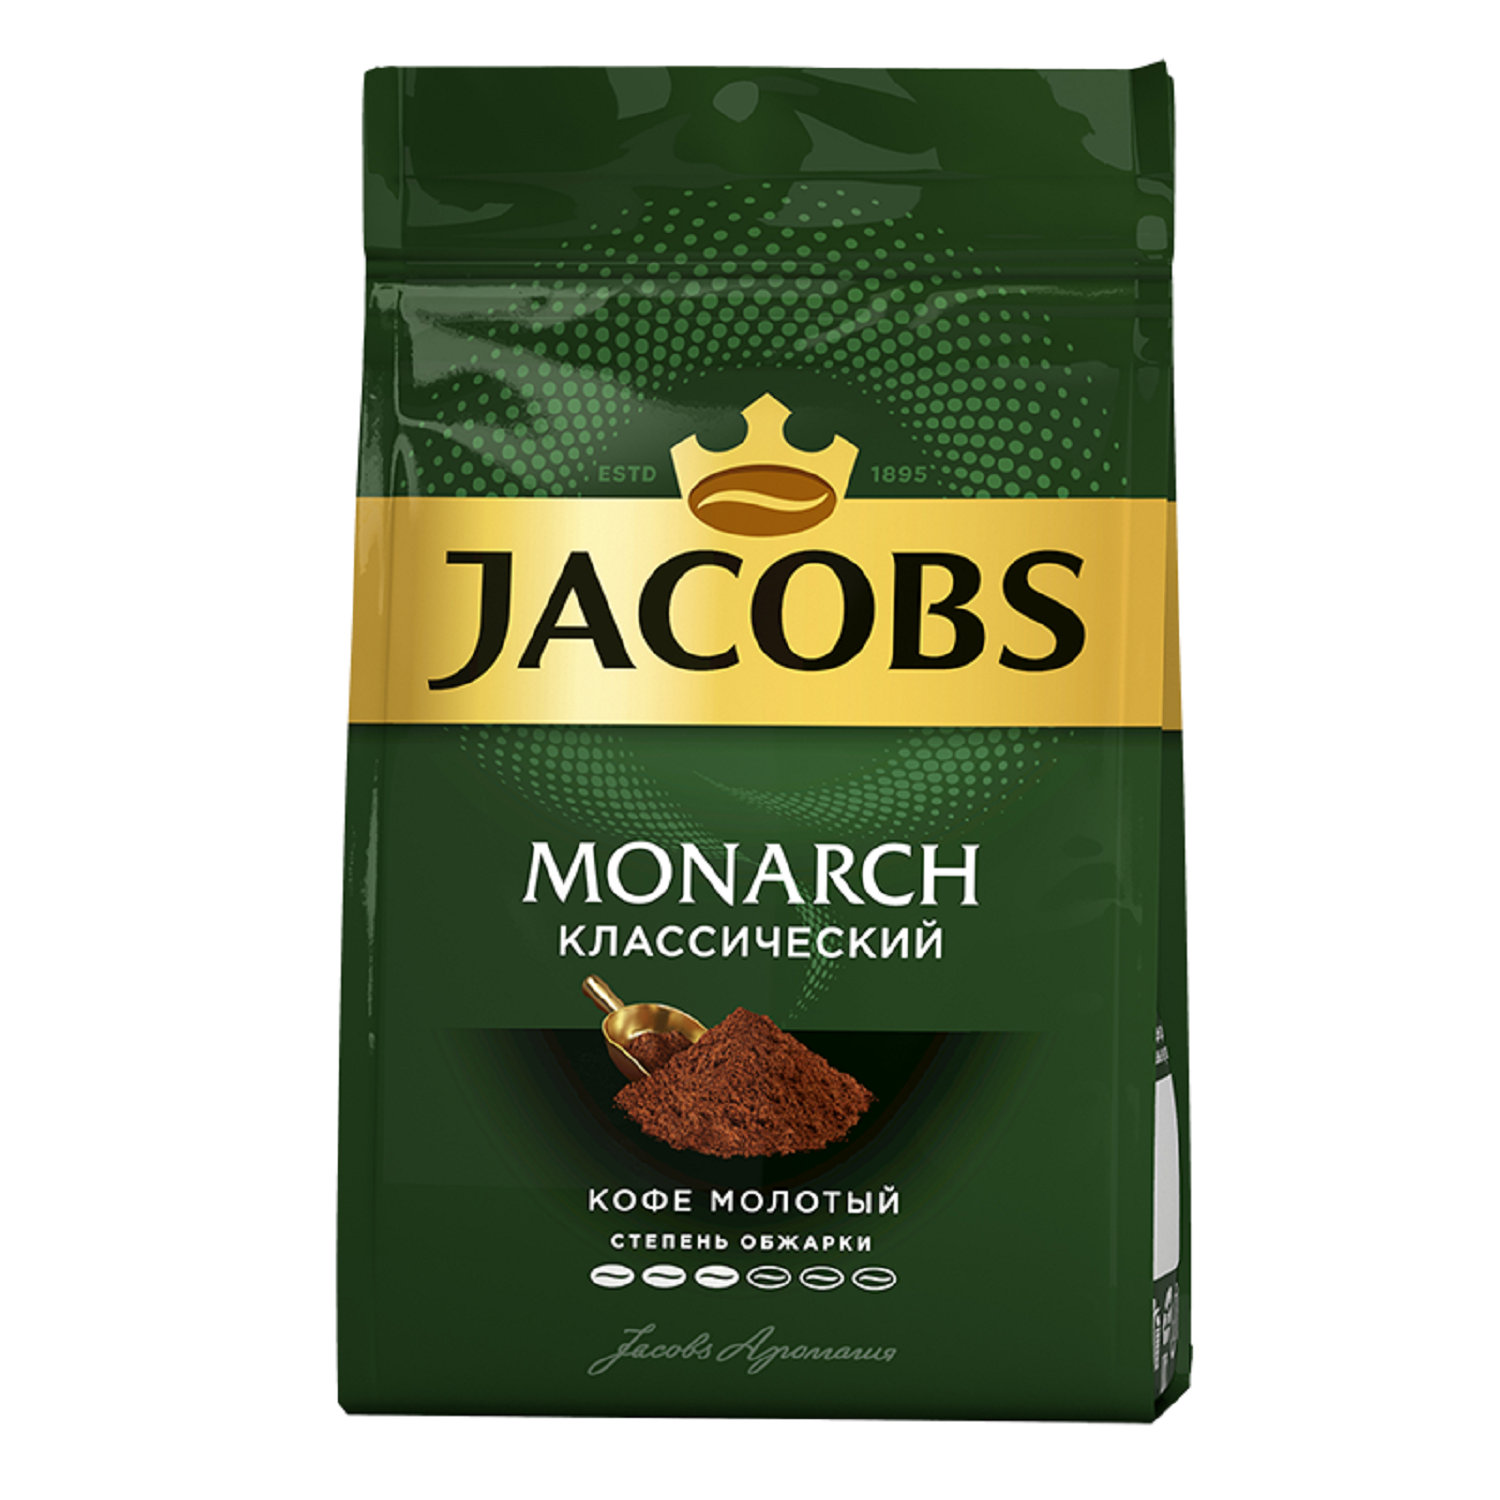 Кофе молотый jacobs. Кофе молотый Jacobs Monarch классический. Якобс Монарх 230г молотый. Кофе в зернах Jacobs Monarch 230. Якобс Монарх в зернах 230 гр.